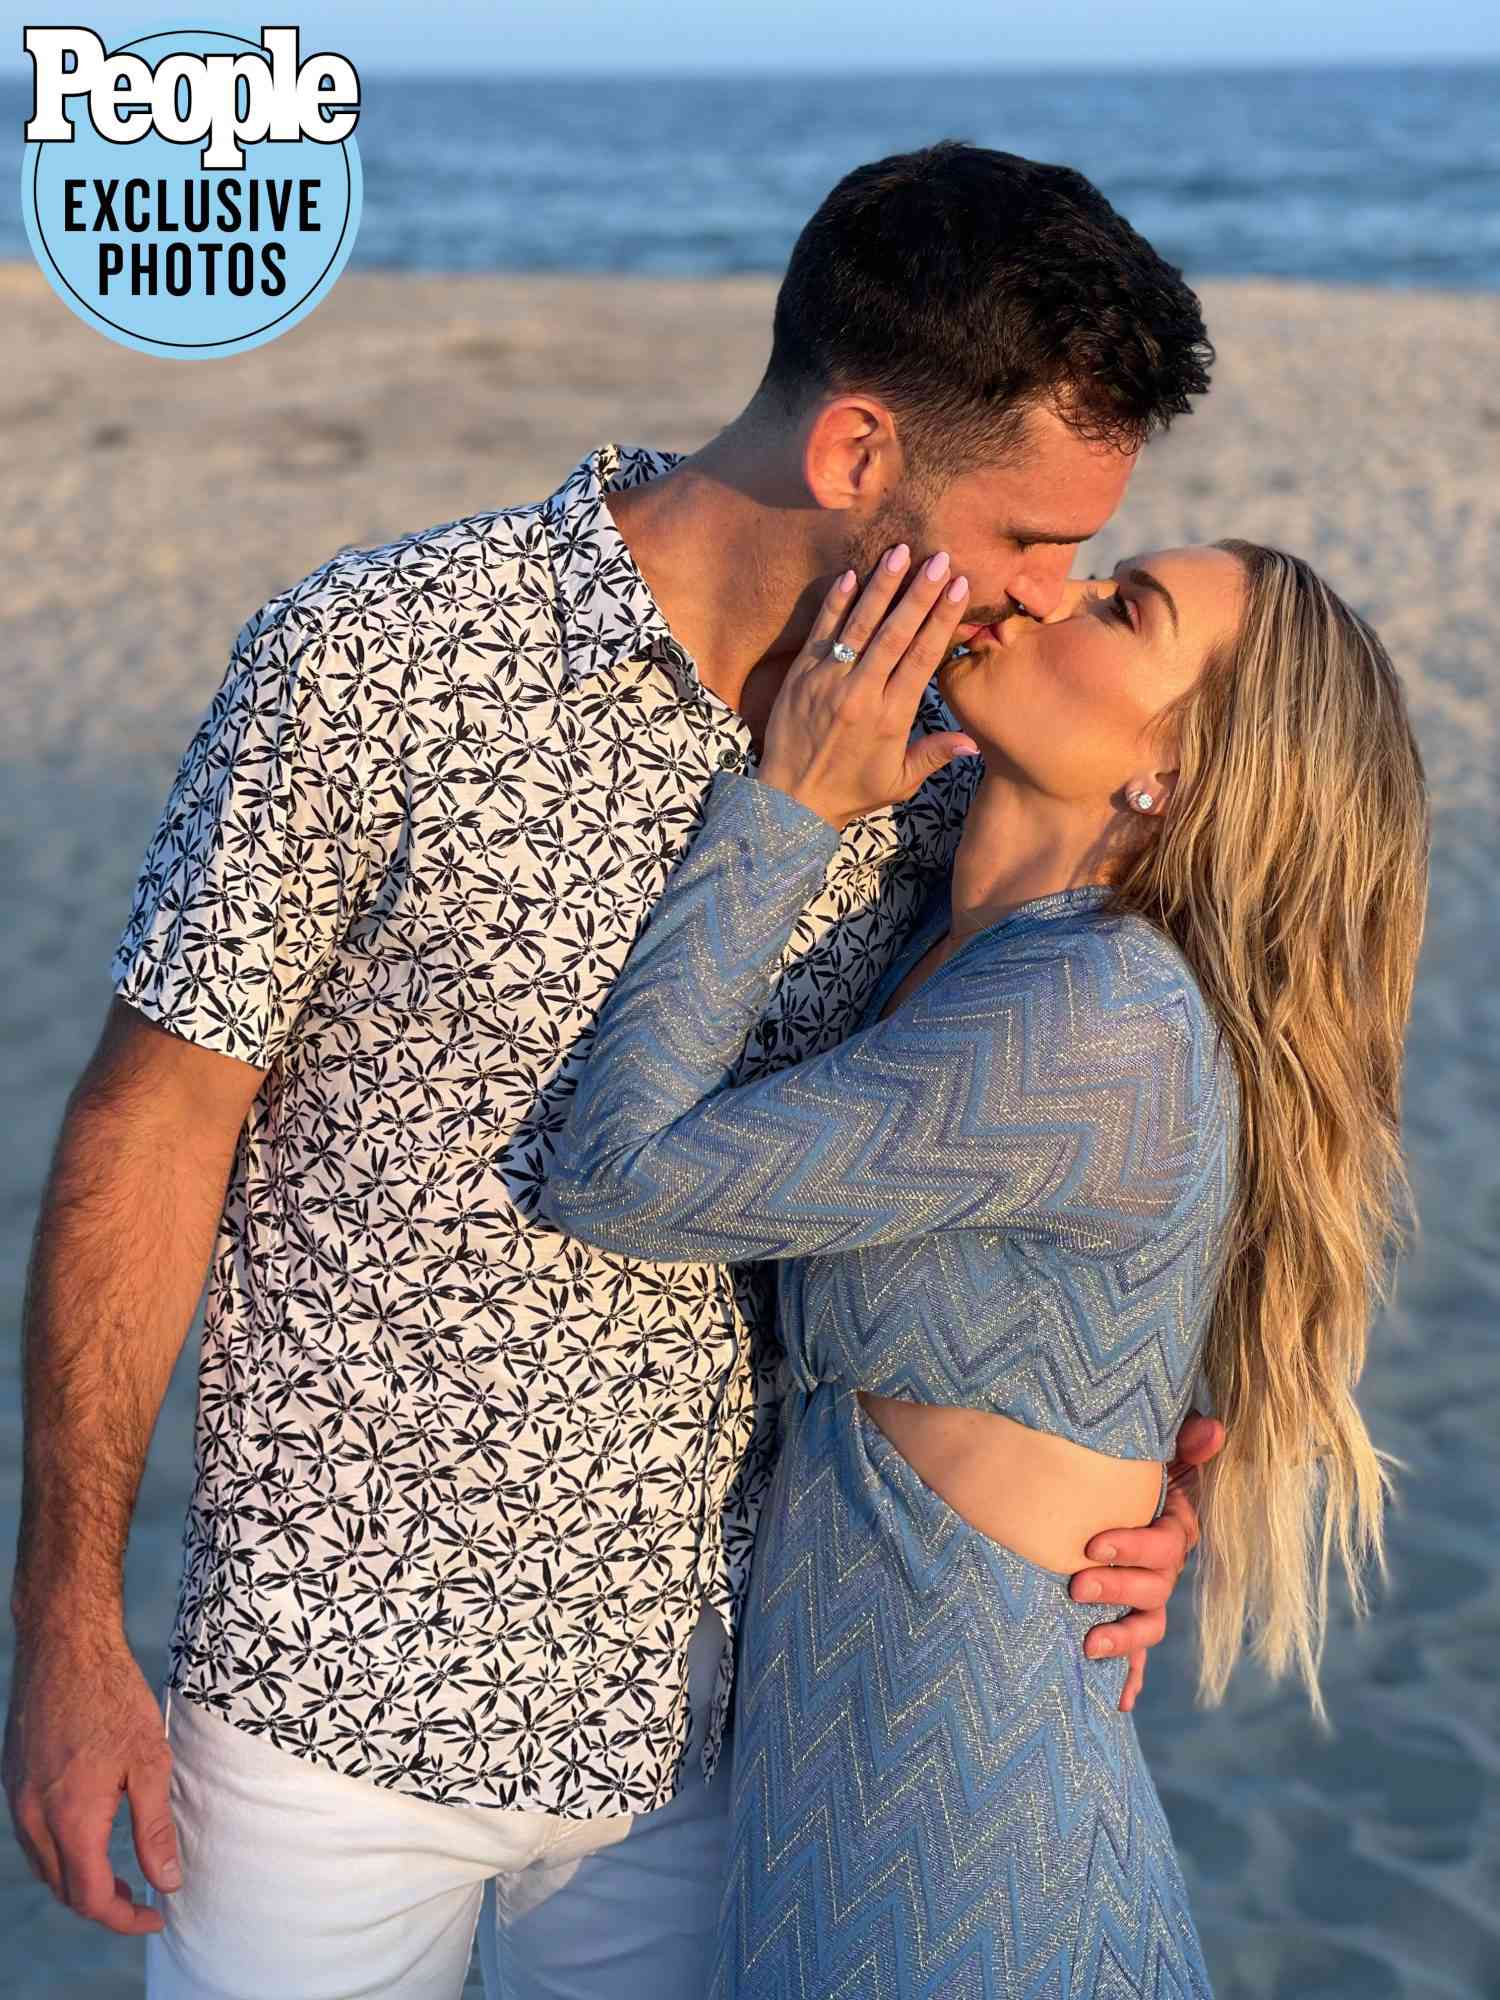 Phot credit: Adam Szulewski Olga Lezhepekova HED: Summer House Stars Lindsay Hubbard and Carl Radke Are Engaged After Romantic Beachside Proposal — See Her Ring